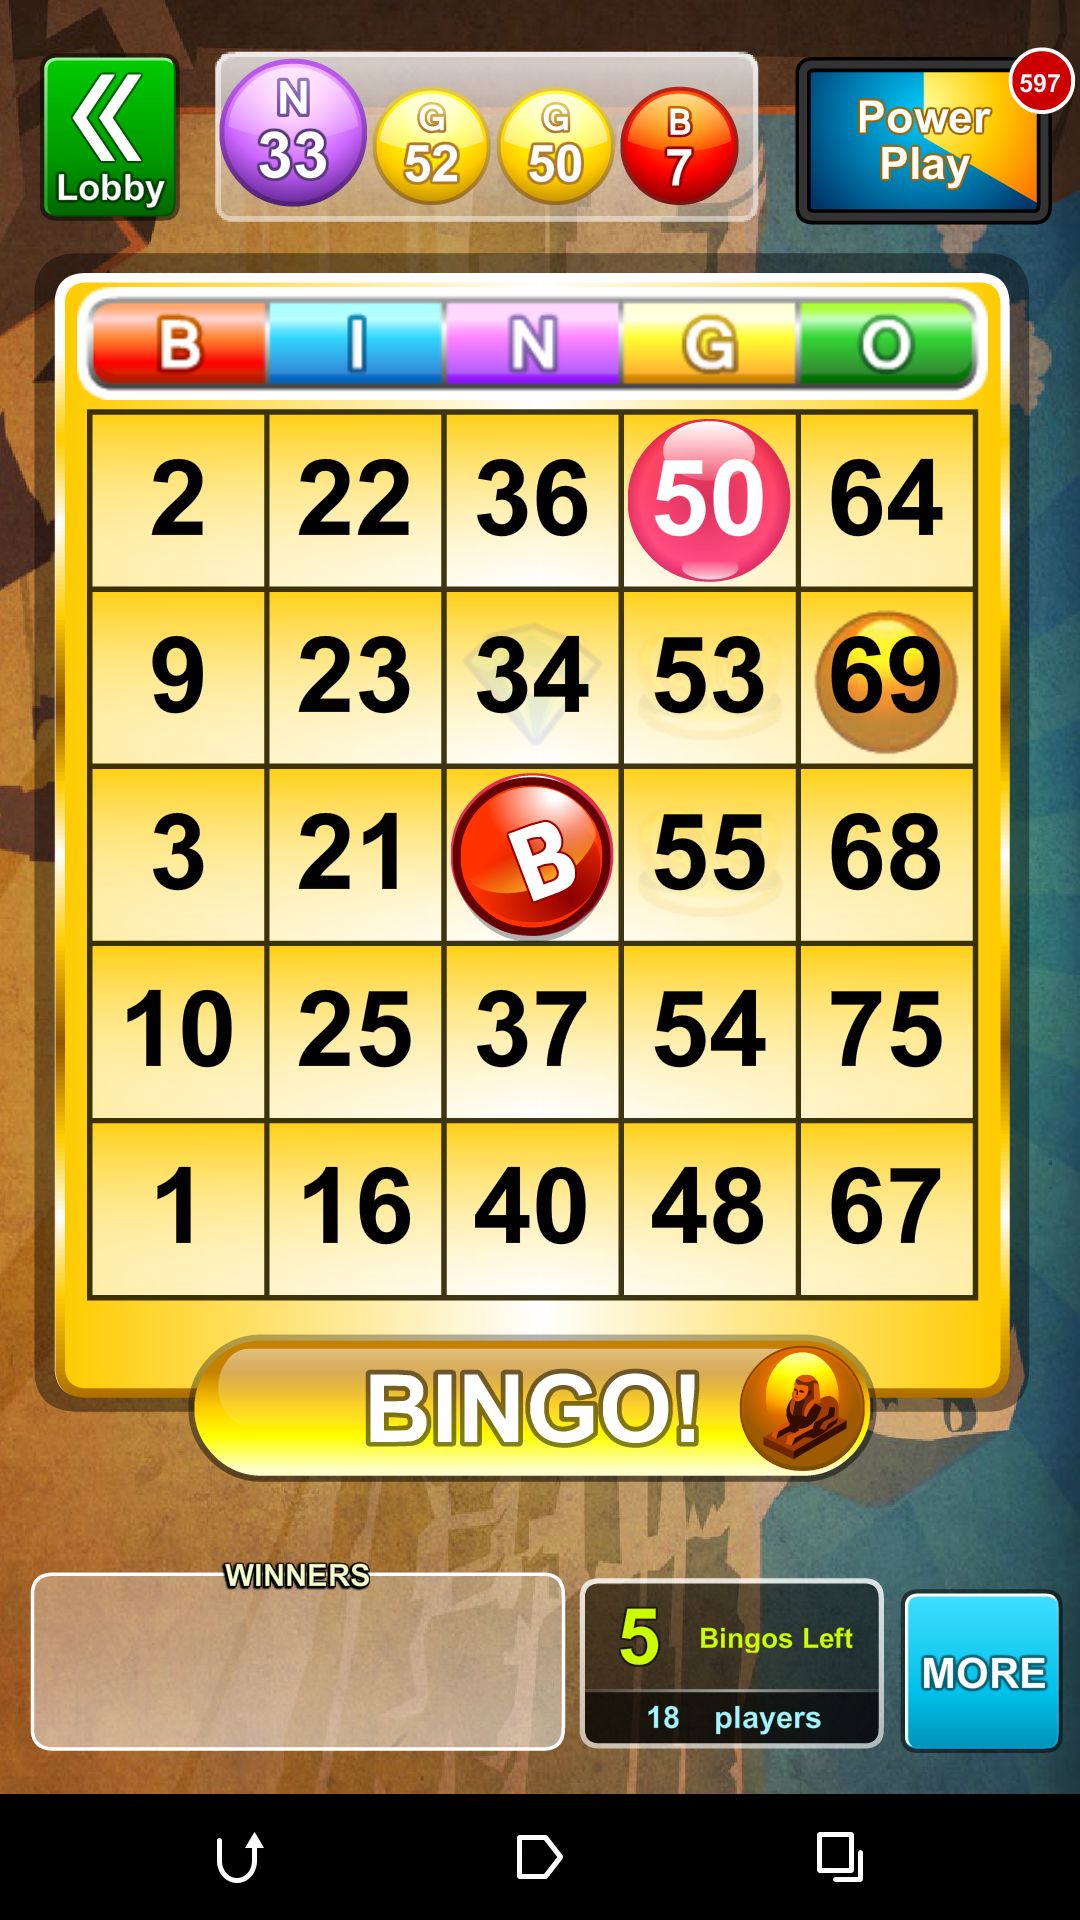 free chips bingo bash